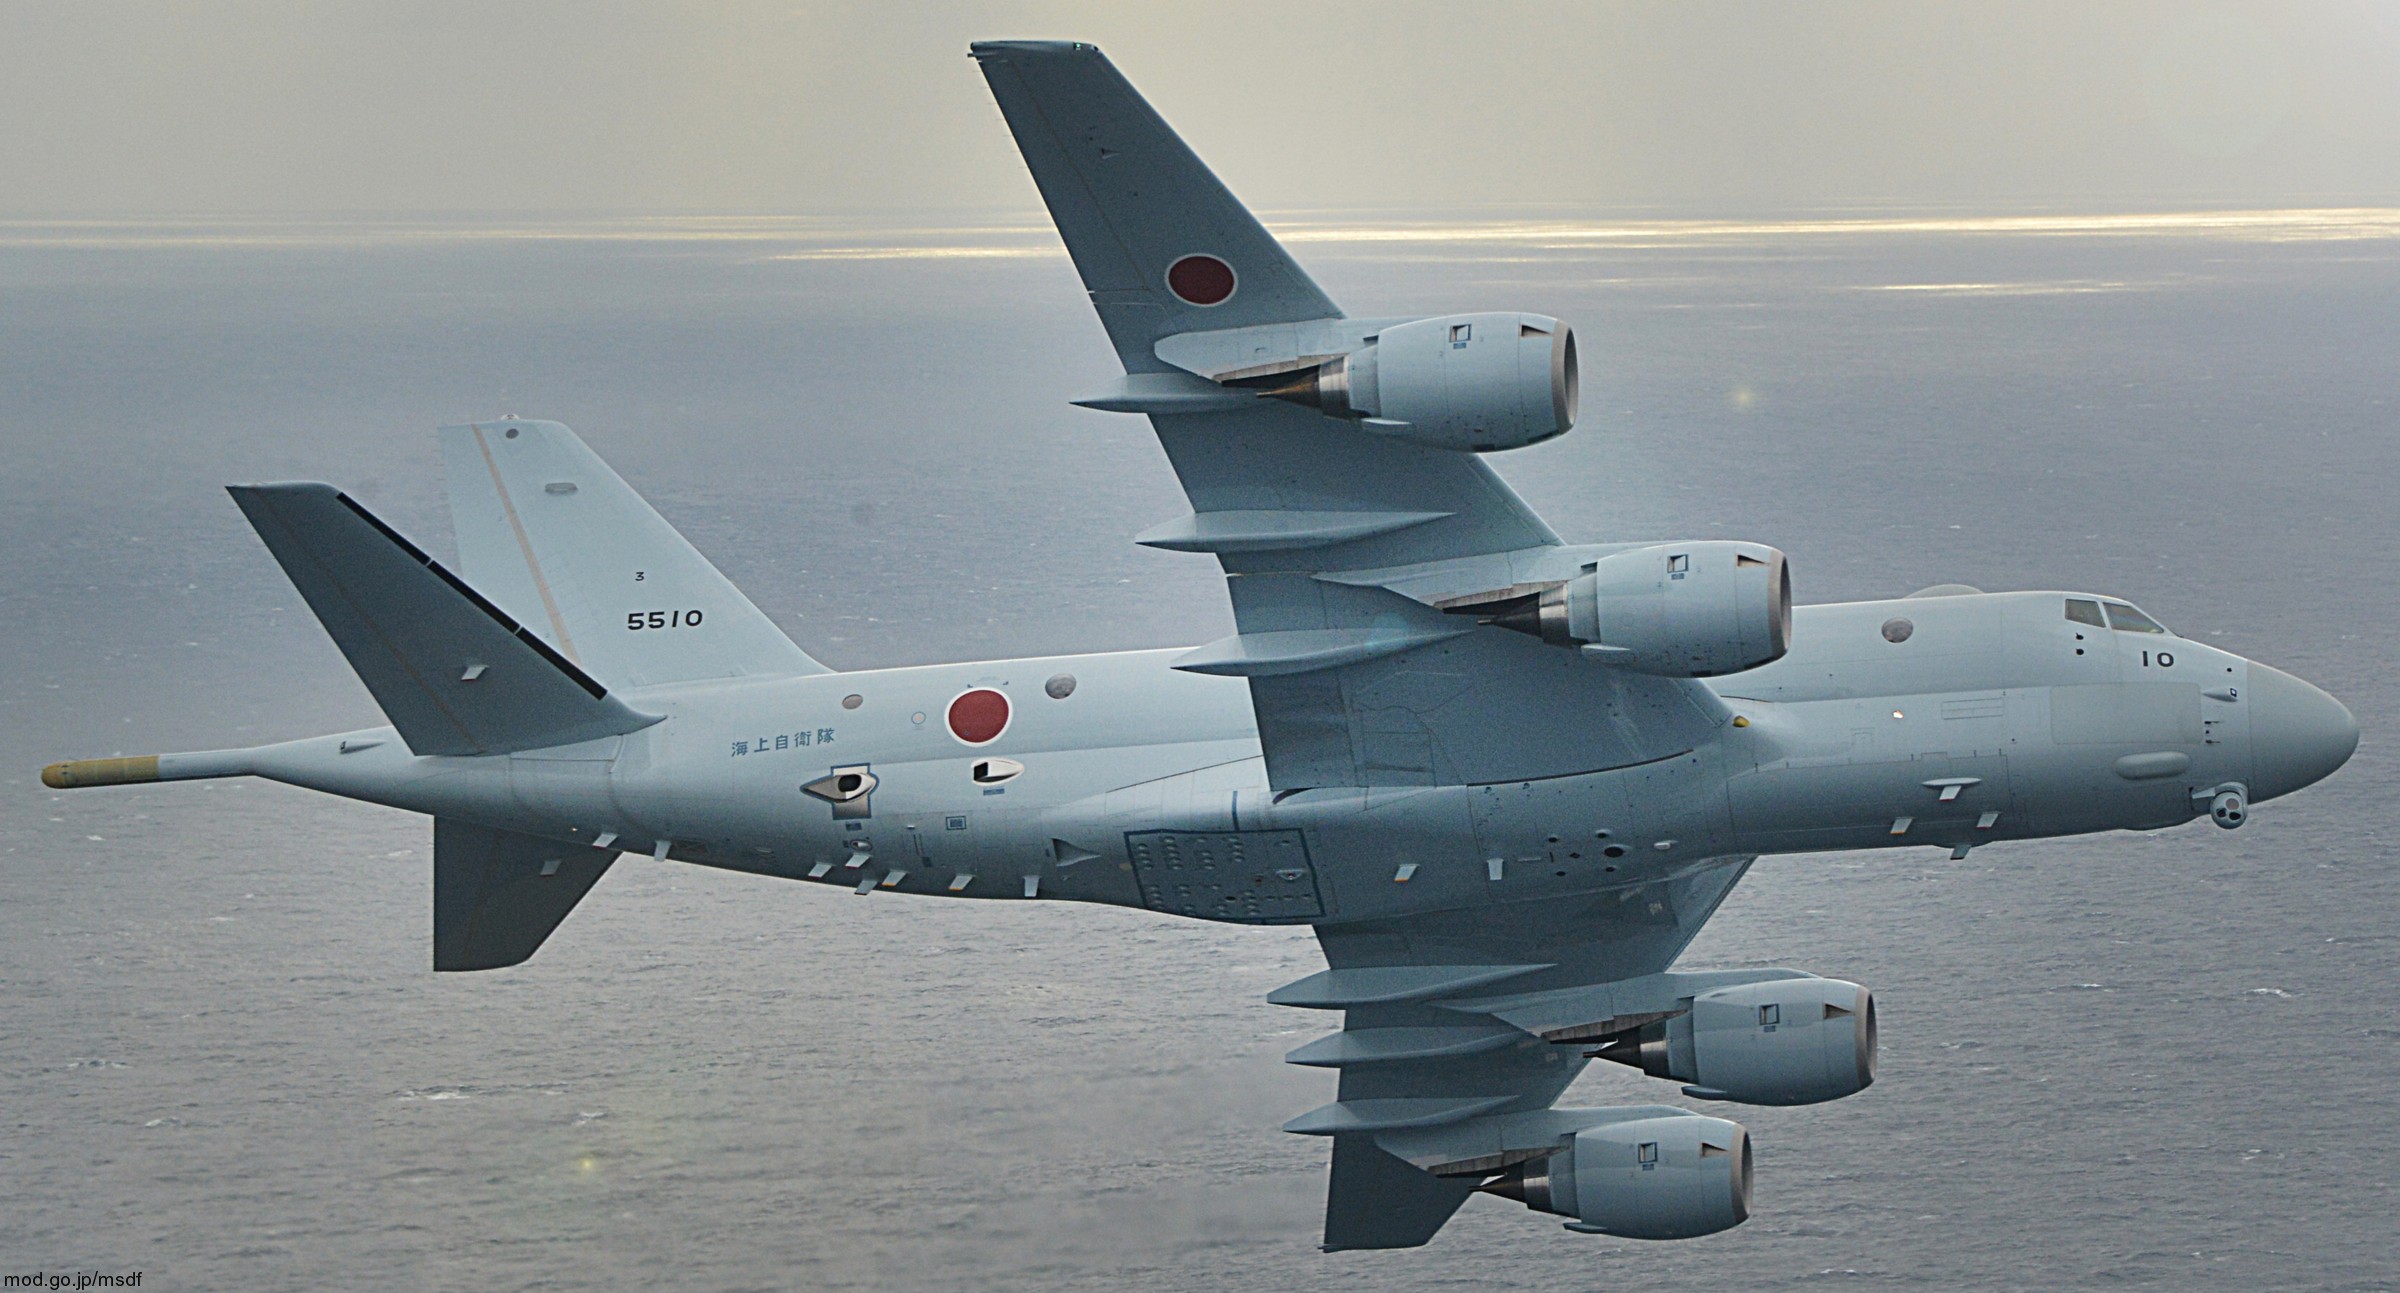 kawasaki p-1 patrol aircraft mpa japan maritime self defense force jmsdf 5510 02